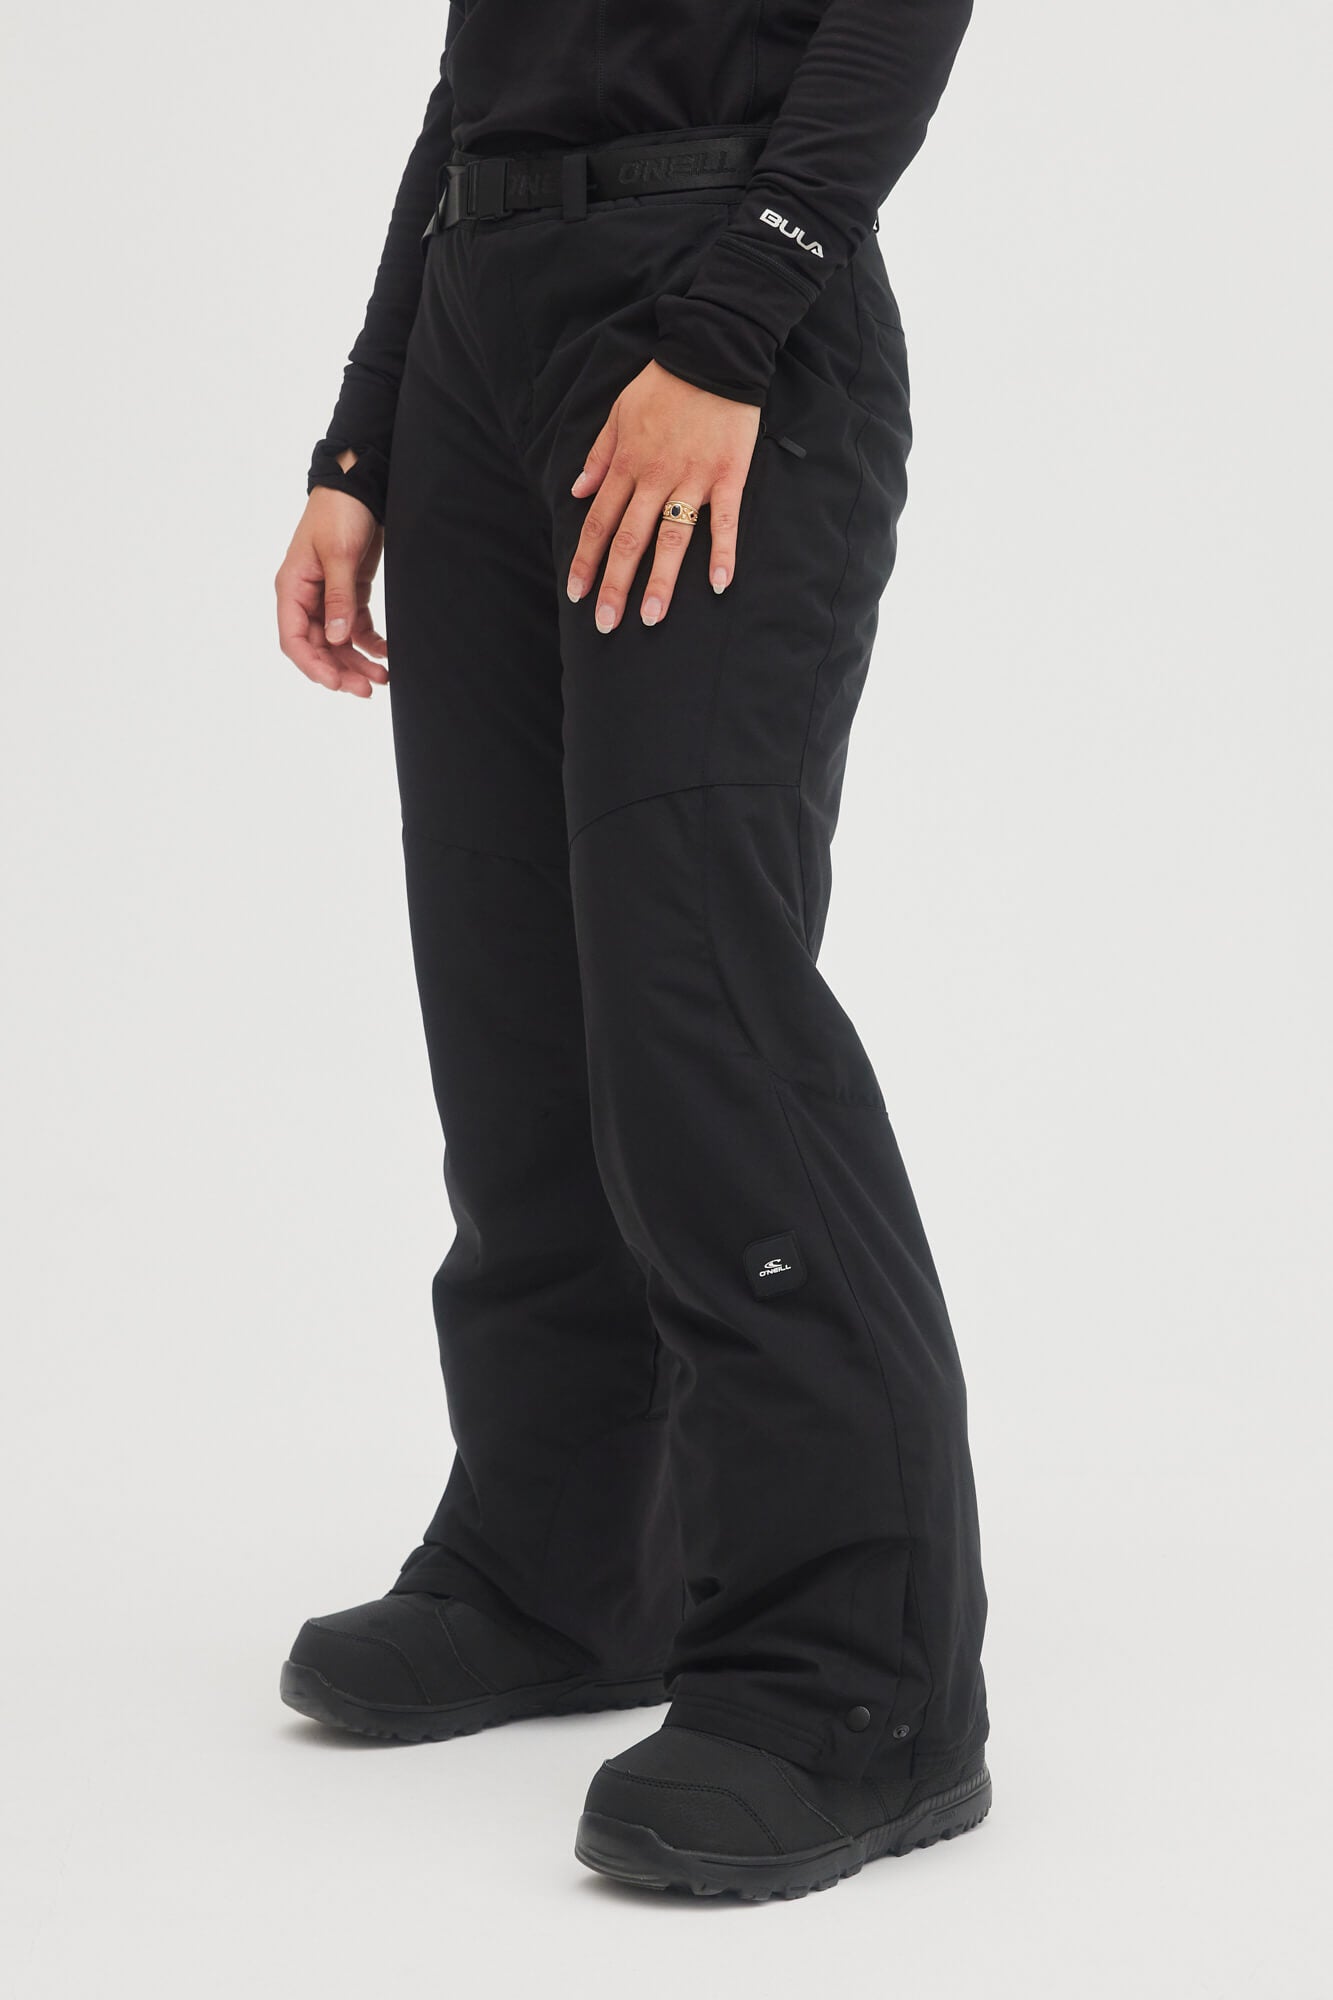 Women's Star Slim Snow Pants - Black Out